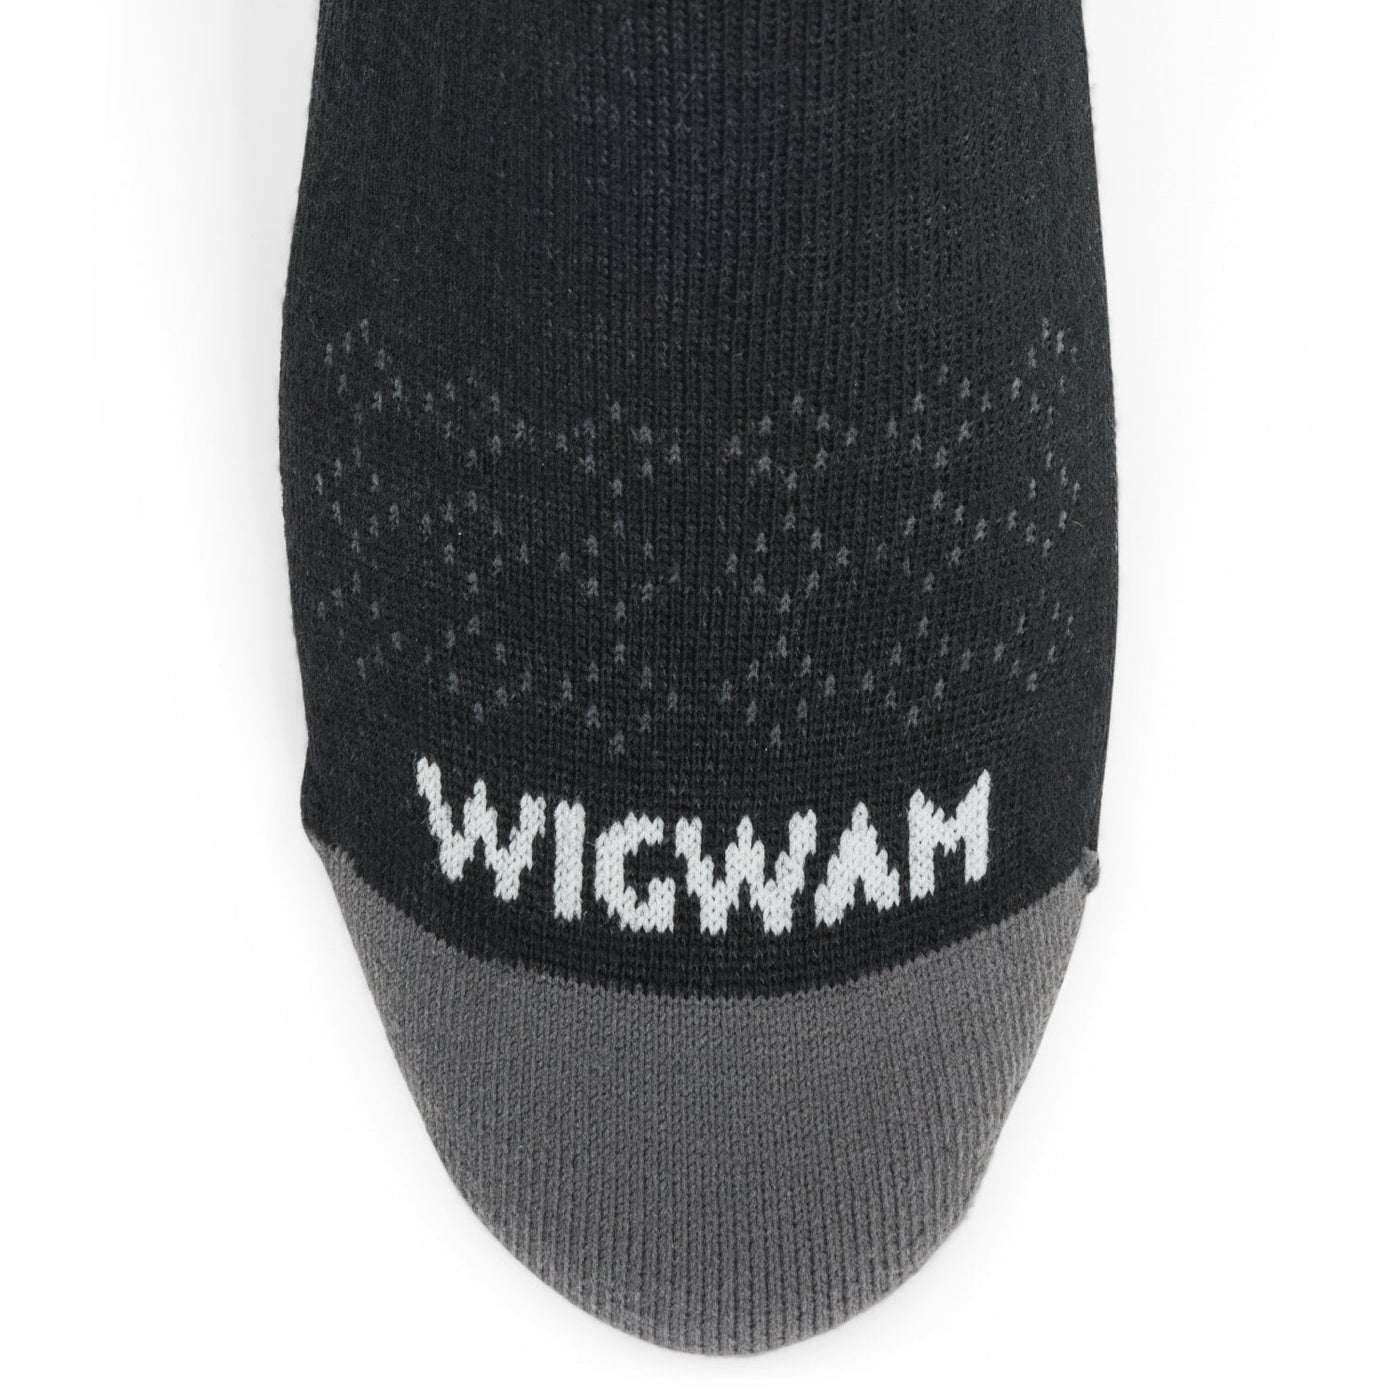 Wigwam Arbor NXT Mid Crew Socks Unisex - Plein Air Entrepôt